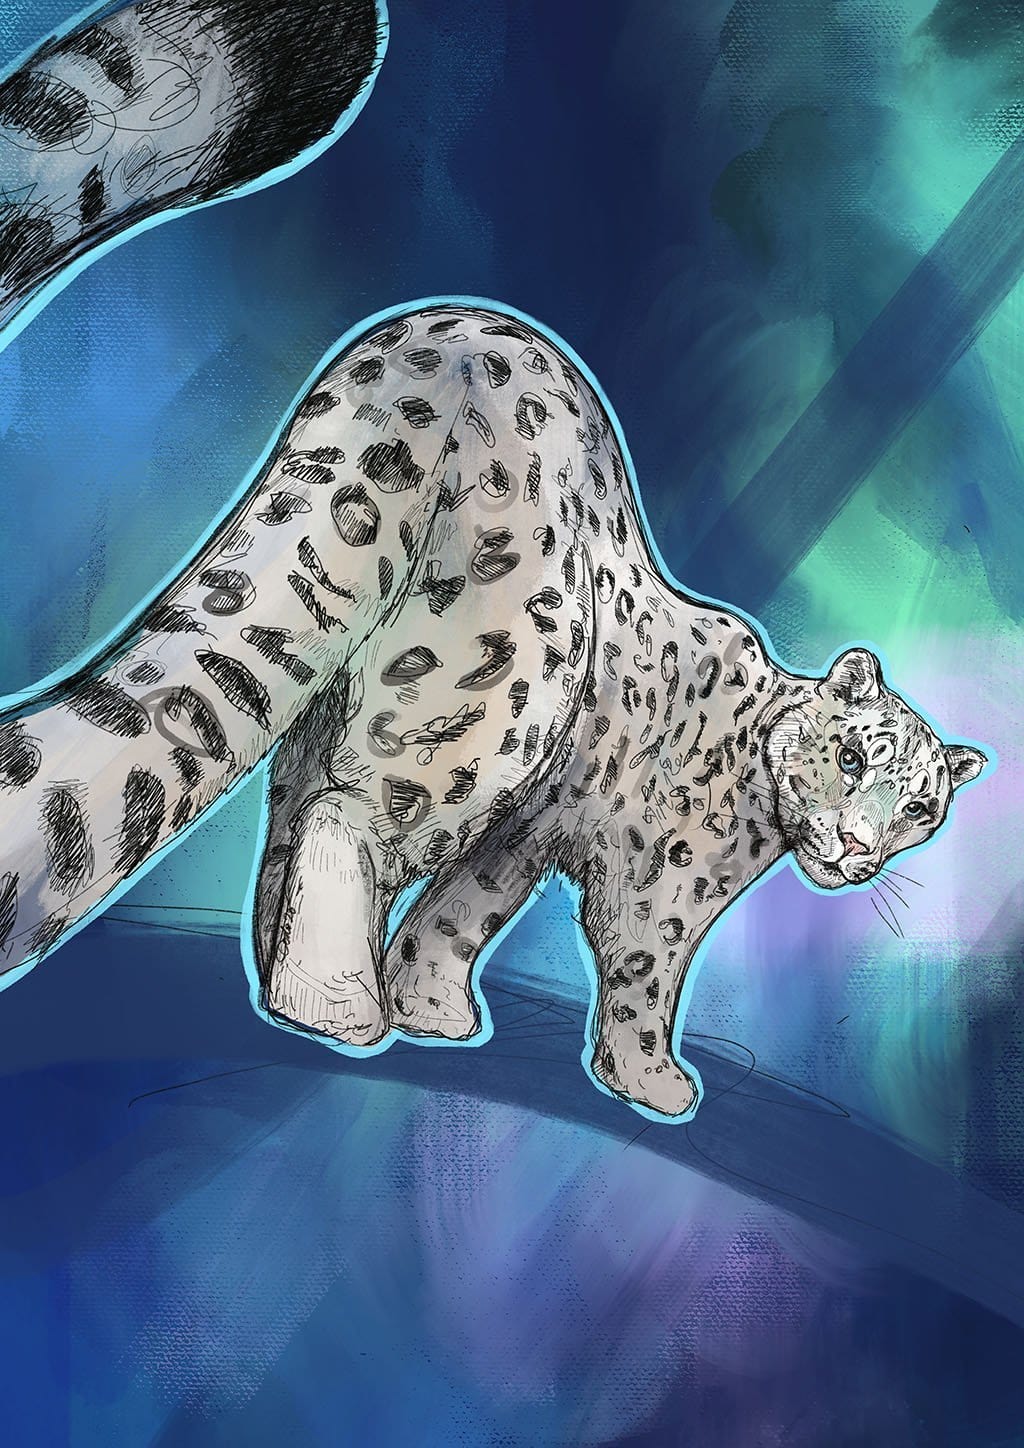 Premium Photo | Female leopard snowy mountain background magical anime style